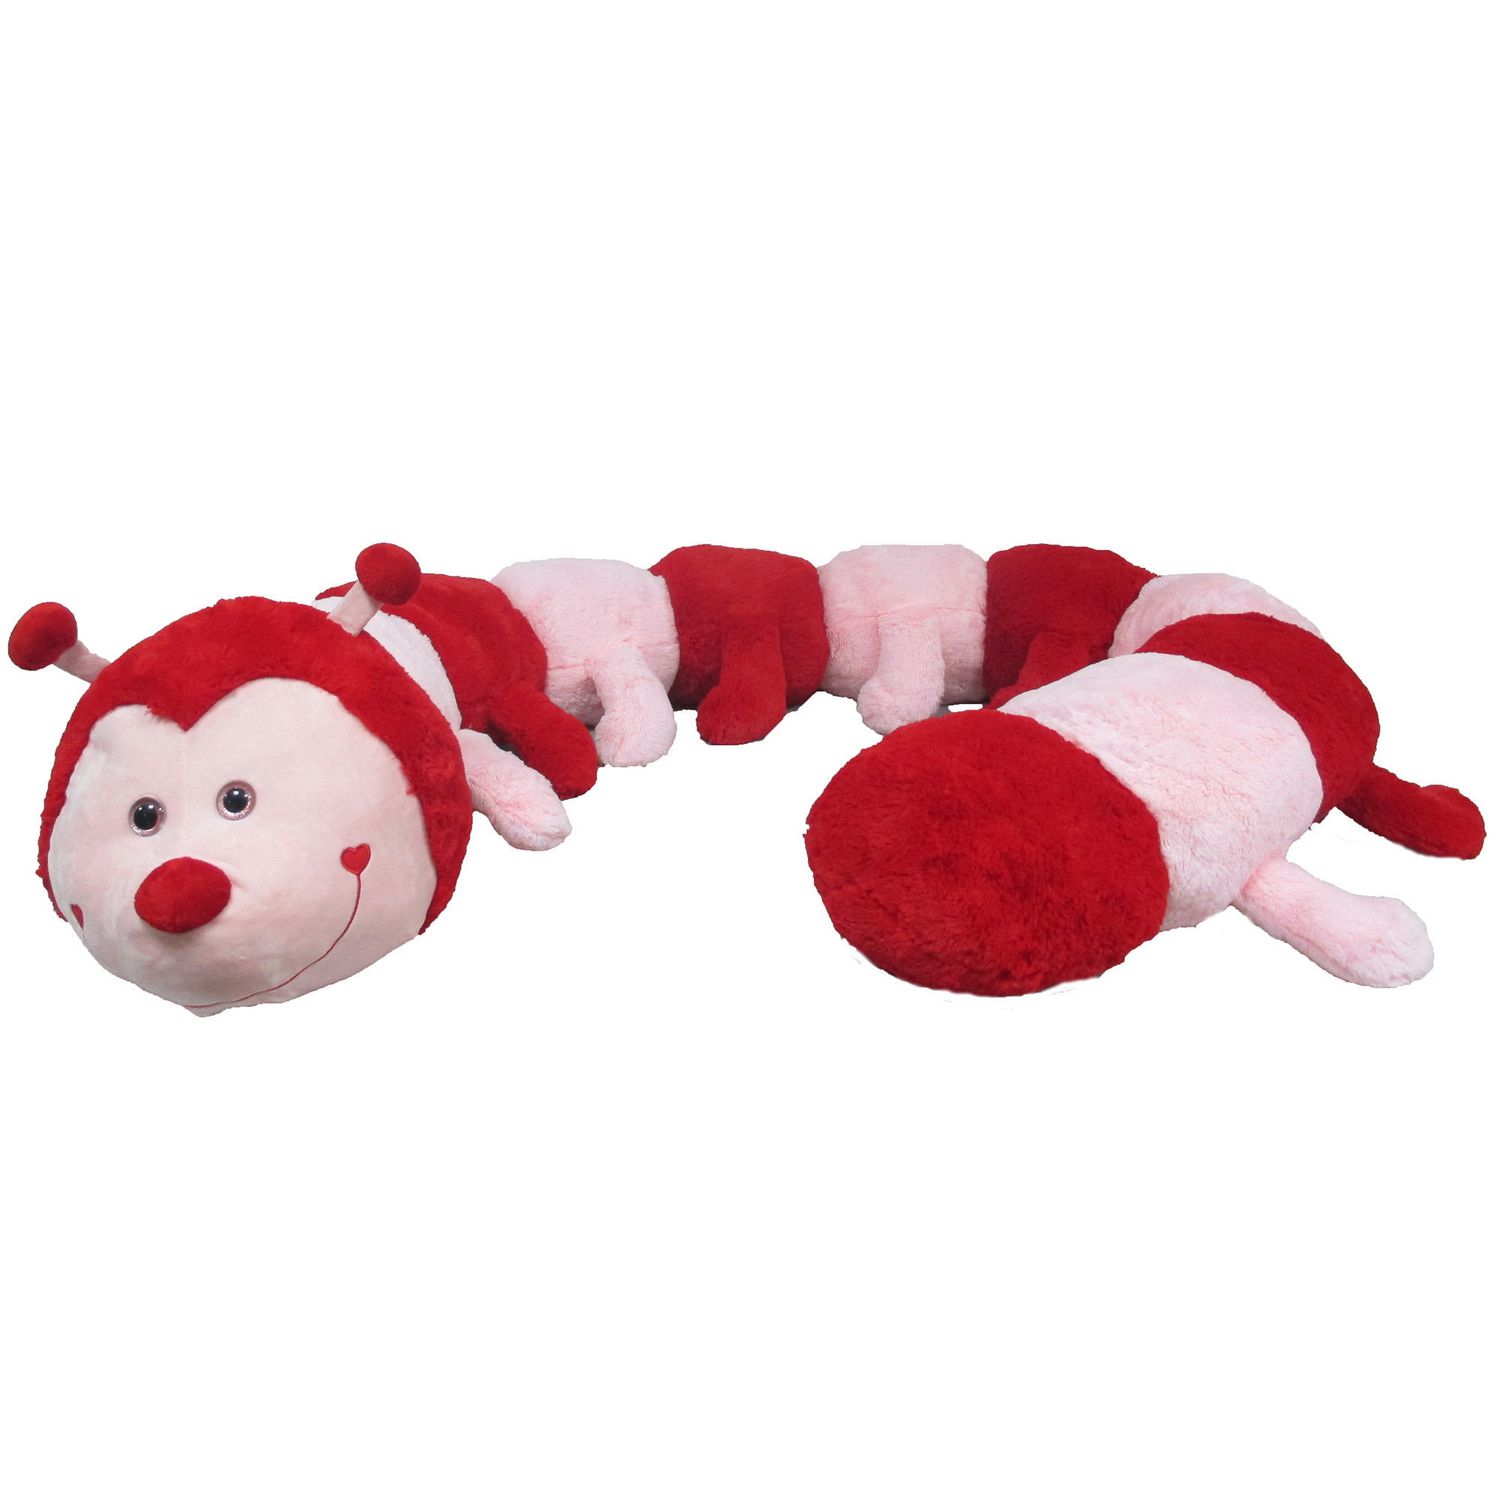 jumbo caterpillar soft toy